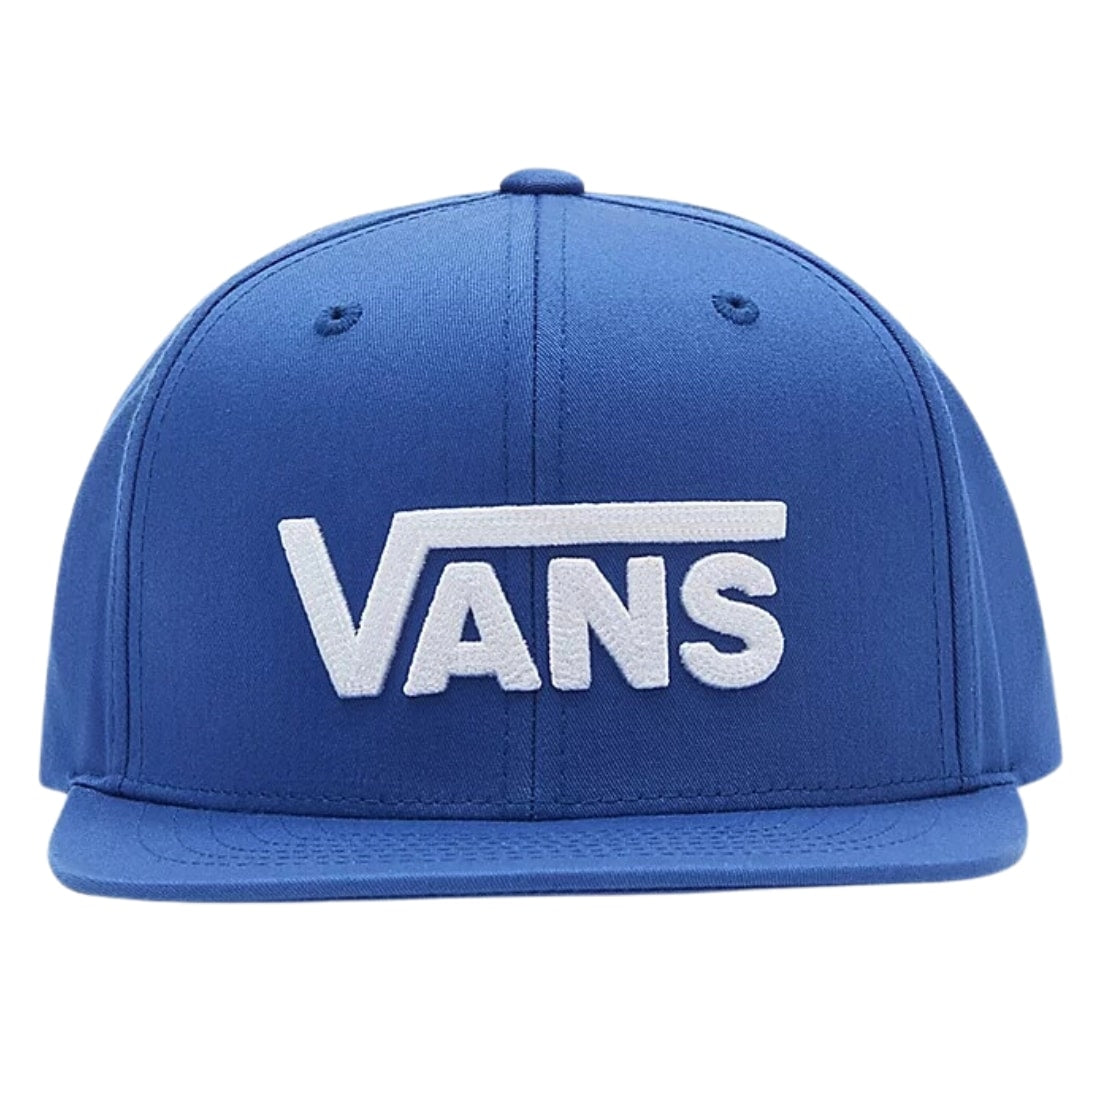 Vans Kids Drop V Snapback Cap - True Blue/White - Boys Baseball Cap by Vans One Size